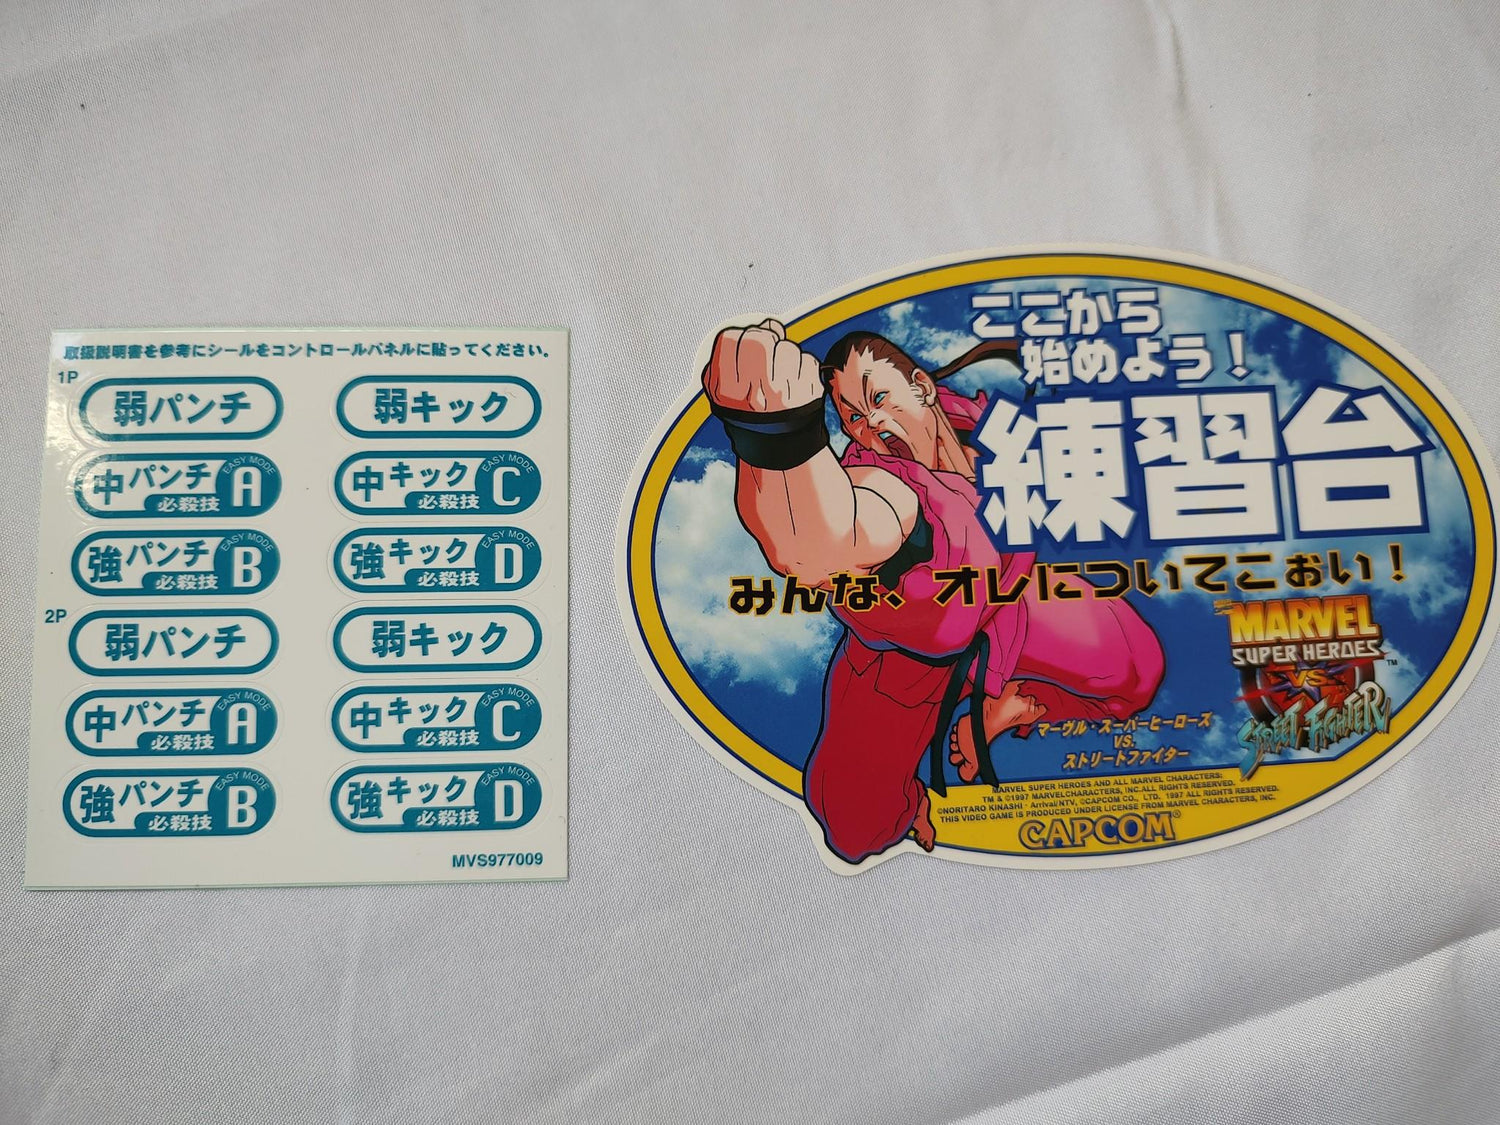 MARVEL SUPER HEROES vs STREET FIGHTER Capcom CPS2 Instruction Card 